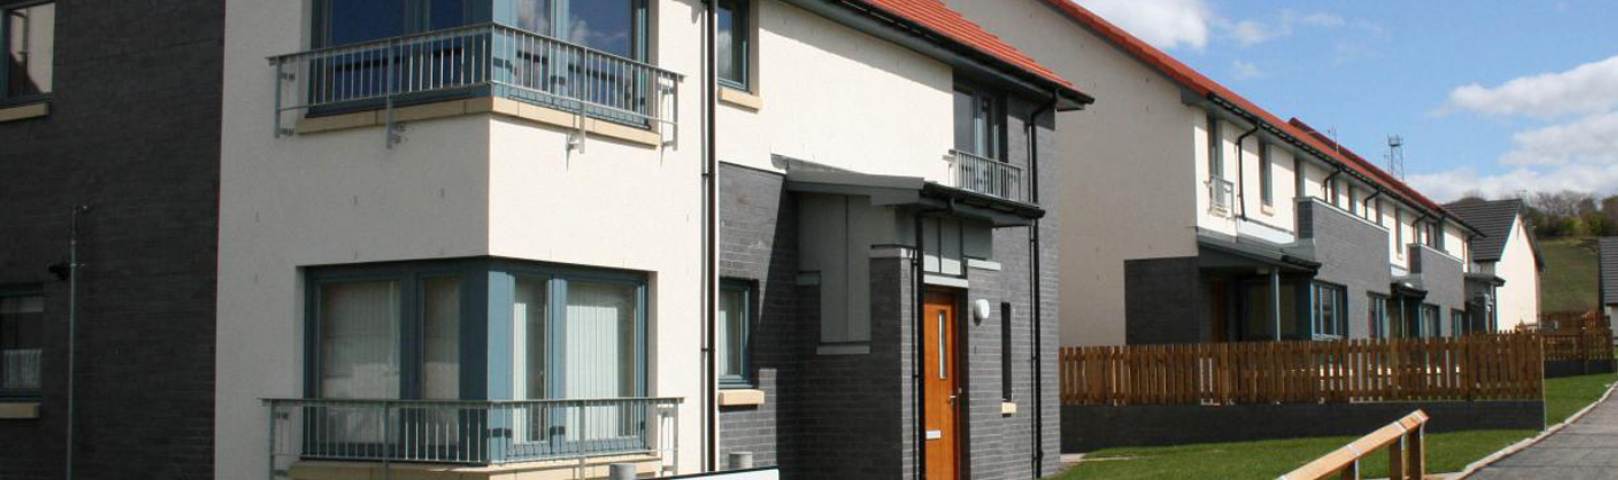 We are Midlothian's largest Registered Social Landlord